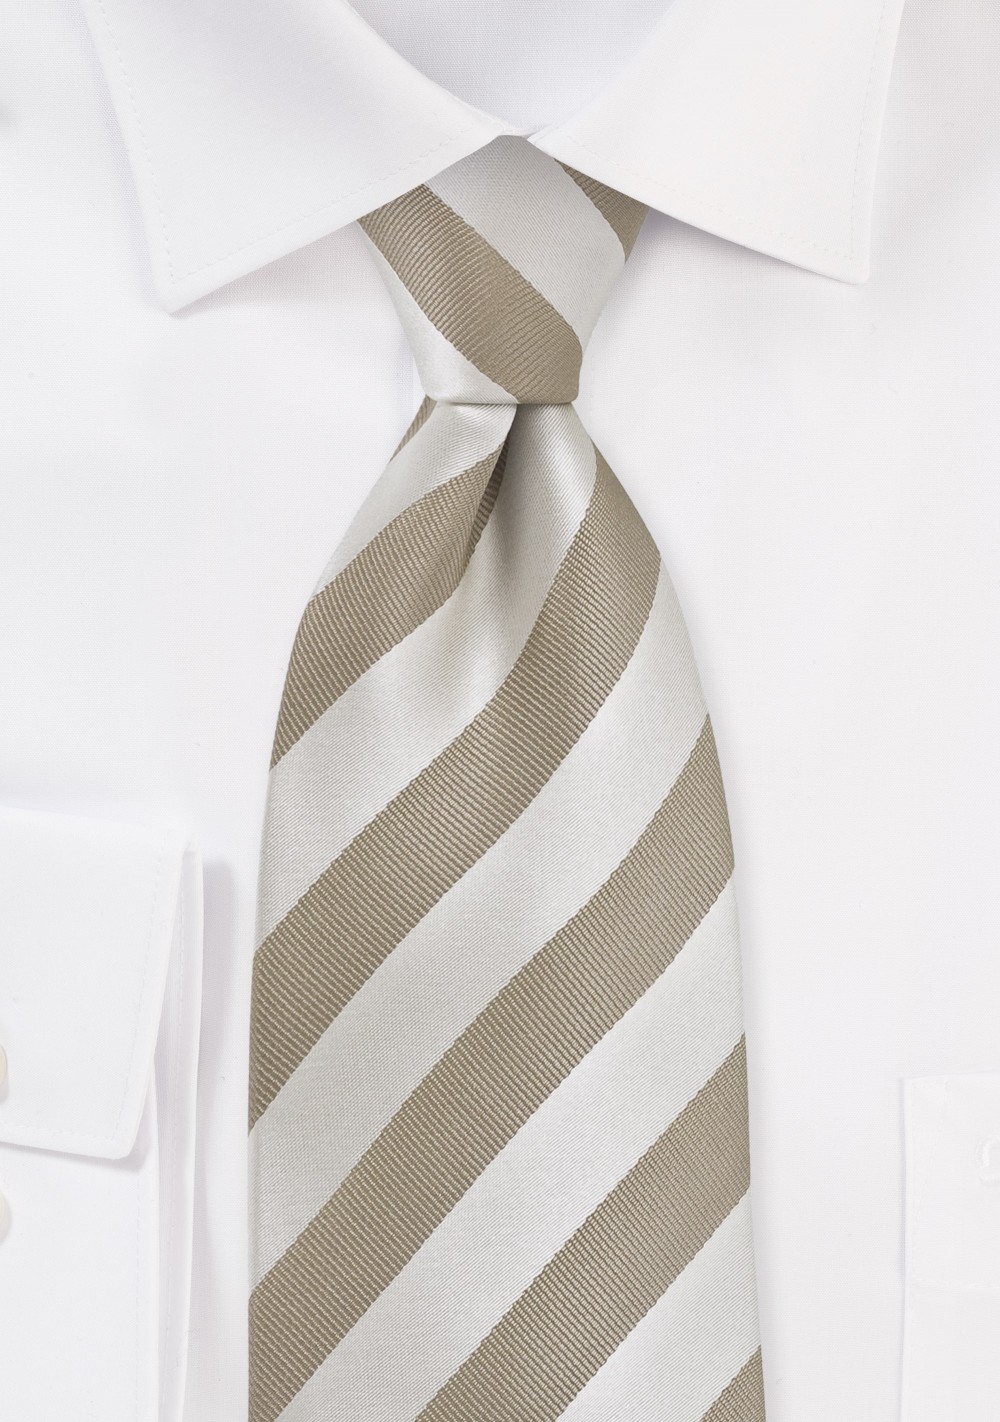 Soft Gold Striped Tie